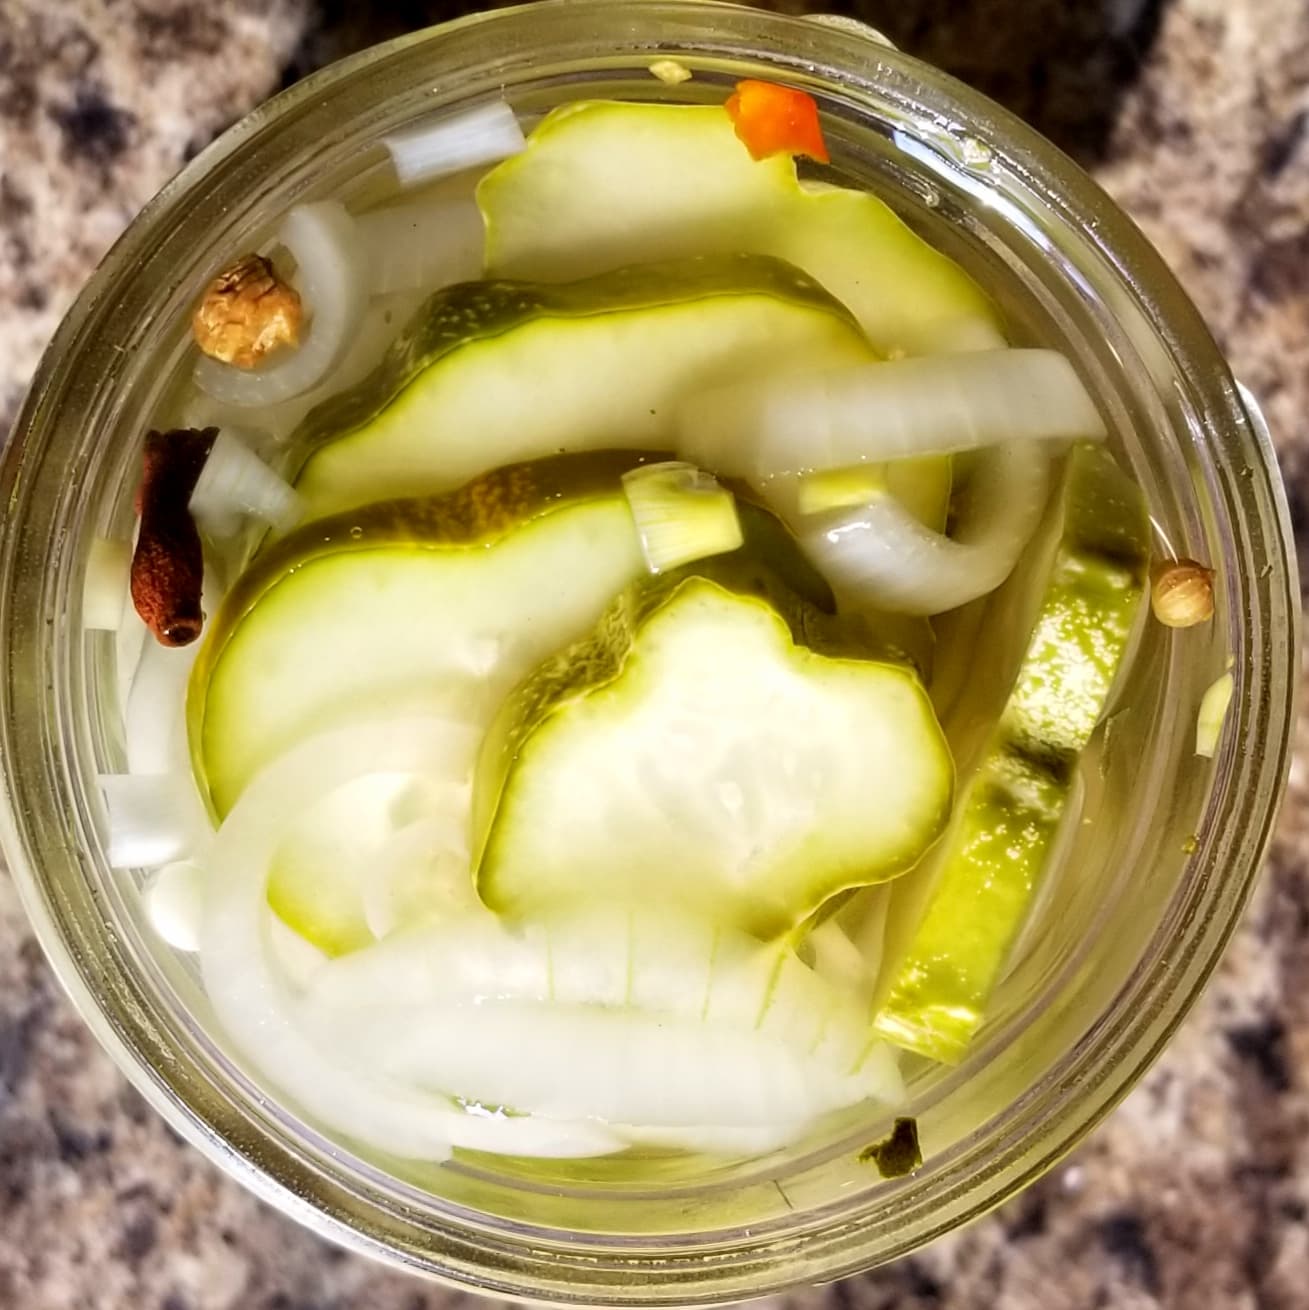 Sweet Onion Pickles